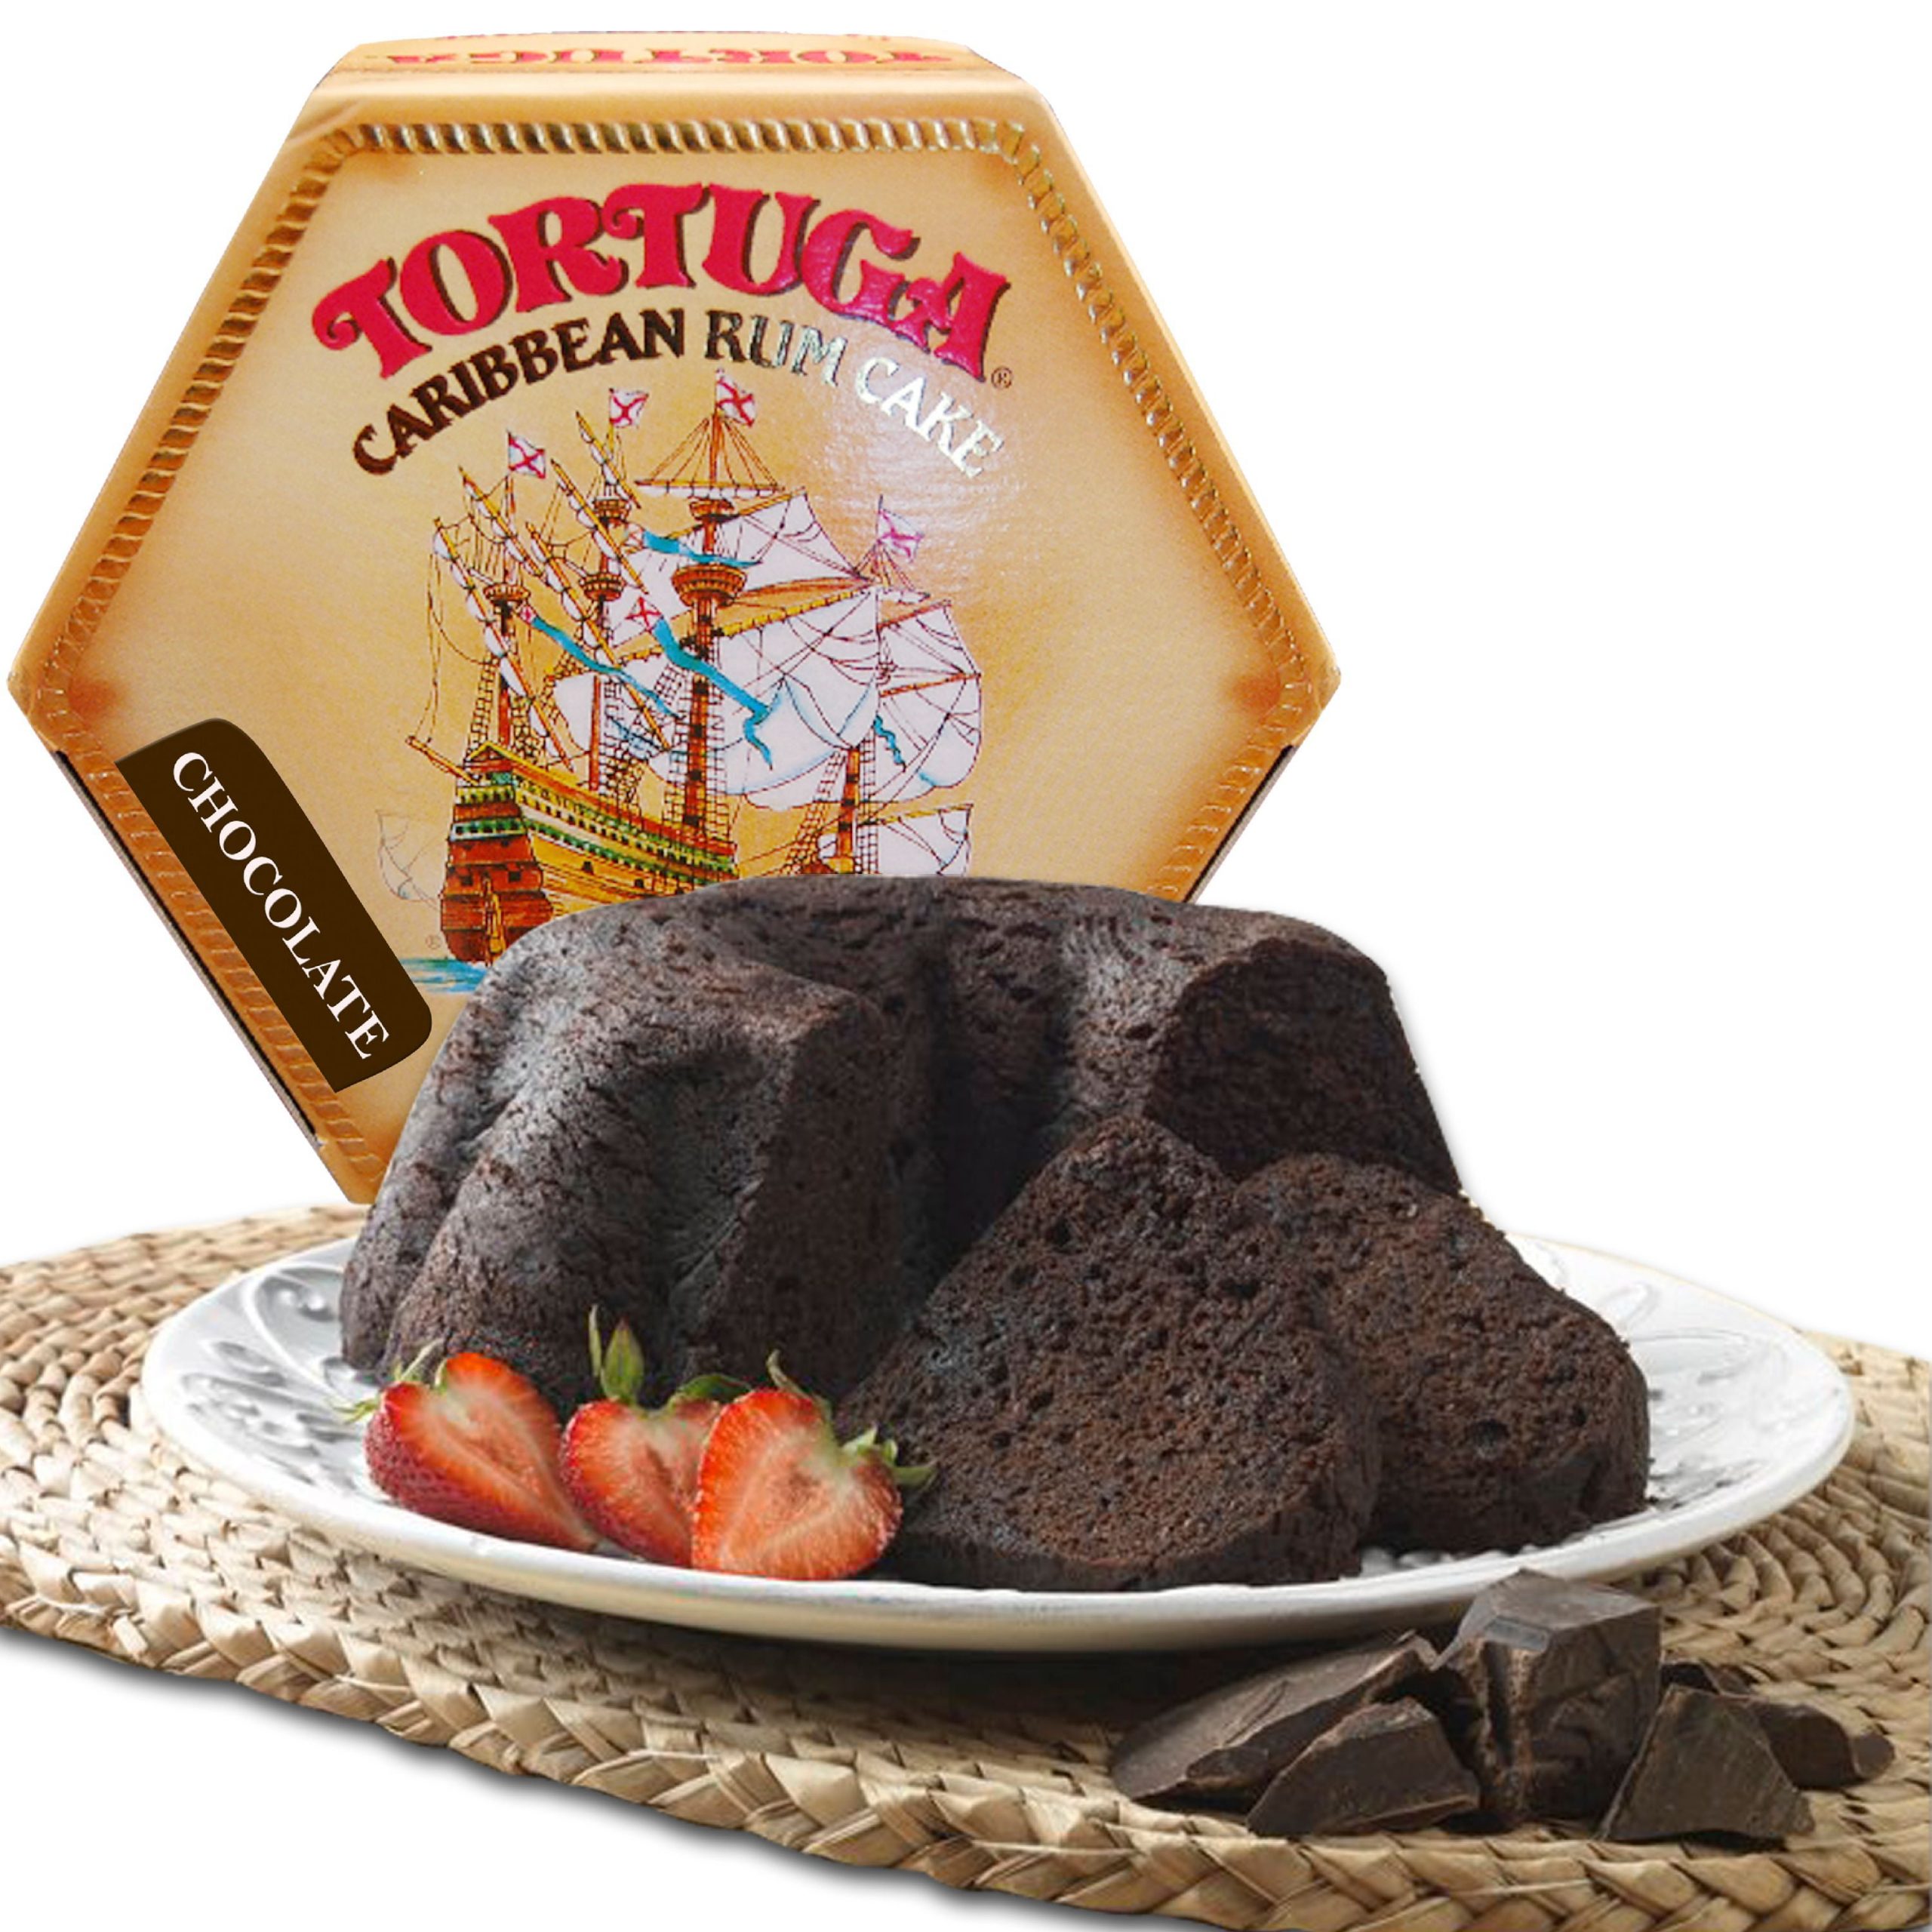 Tortuga Caribbean Rum Cake 4 oz Chocolate Flavored FREE SHIPPING ...